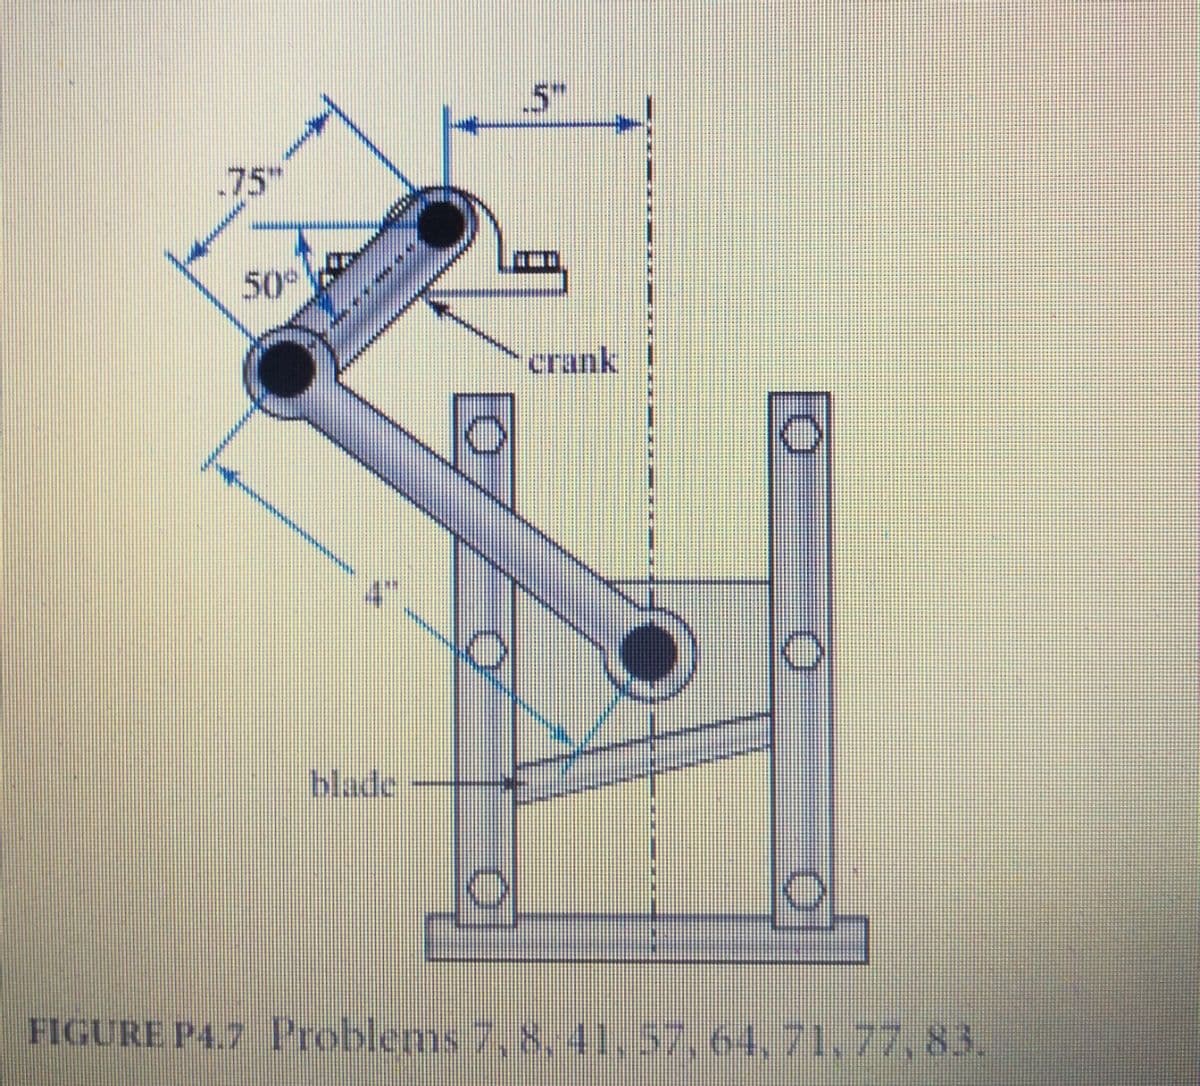 5"
.75"
50
crank
blade
FIGURE P4.7 Problems 7, 8, 41,57, 64, 71, 77,83.
